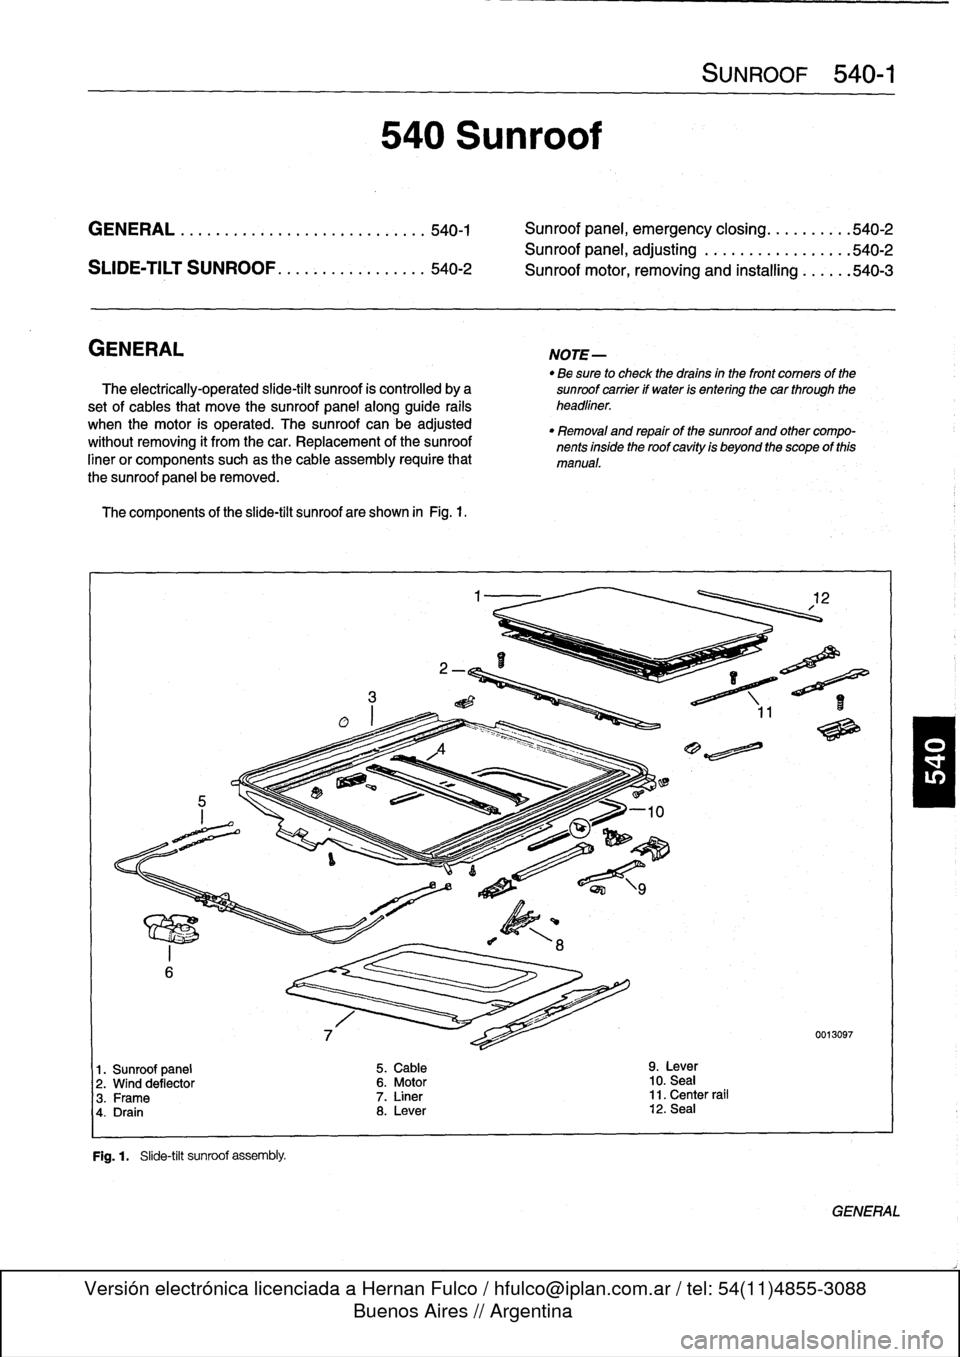 BMW 323i 1993 E36 Workshop Manual 
GENERAL
...
.
.
.
.
.
................
.
.
.
.
540-1

	

Sunroof
panel,
emergency
closing
.......
.
.
.540-2

Sunroof
panel,
adjusting
..
.
...........
.
.
.540-2

SUDE-TILT
SUNROOF
.
.
.
.
.
.
.
.
.